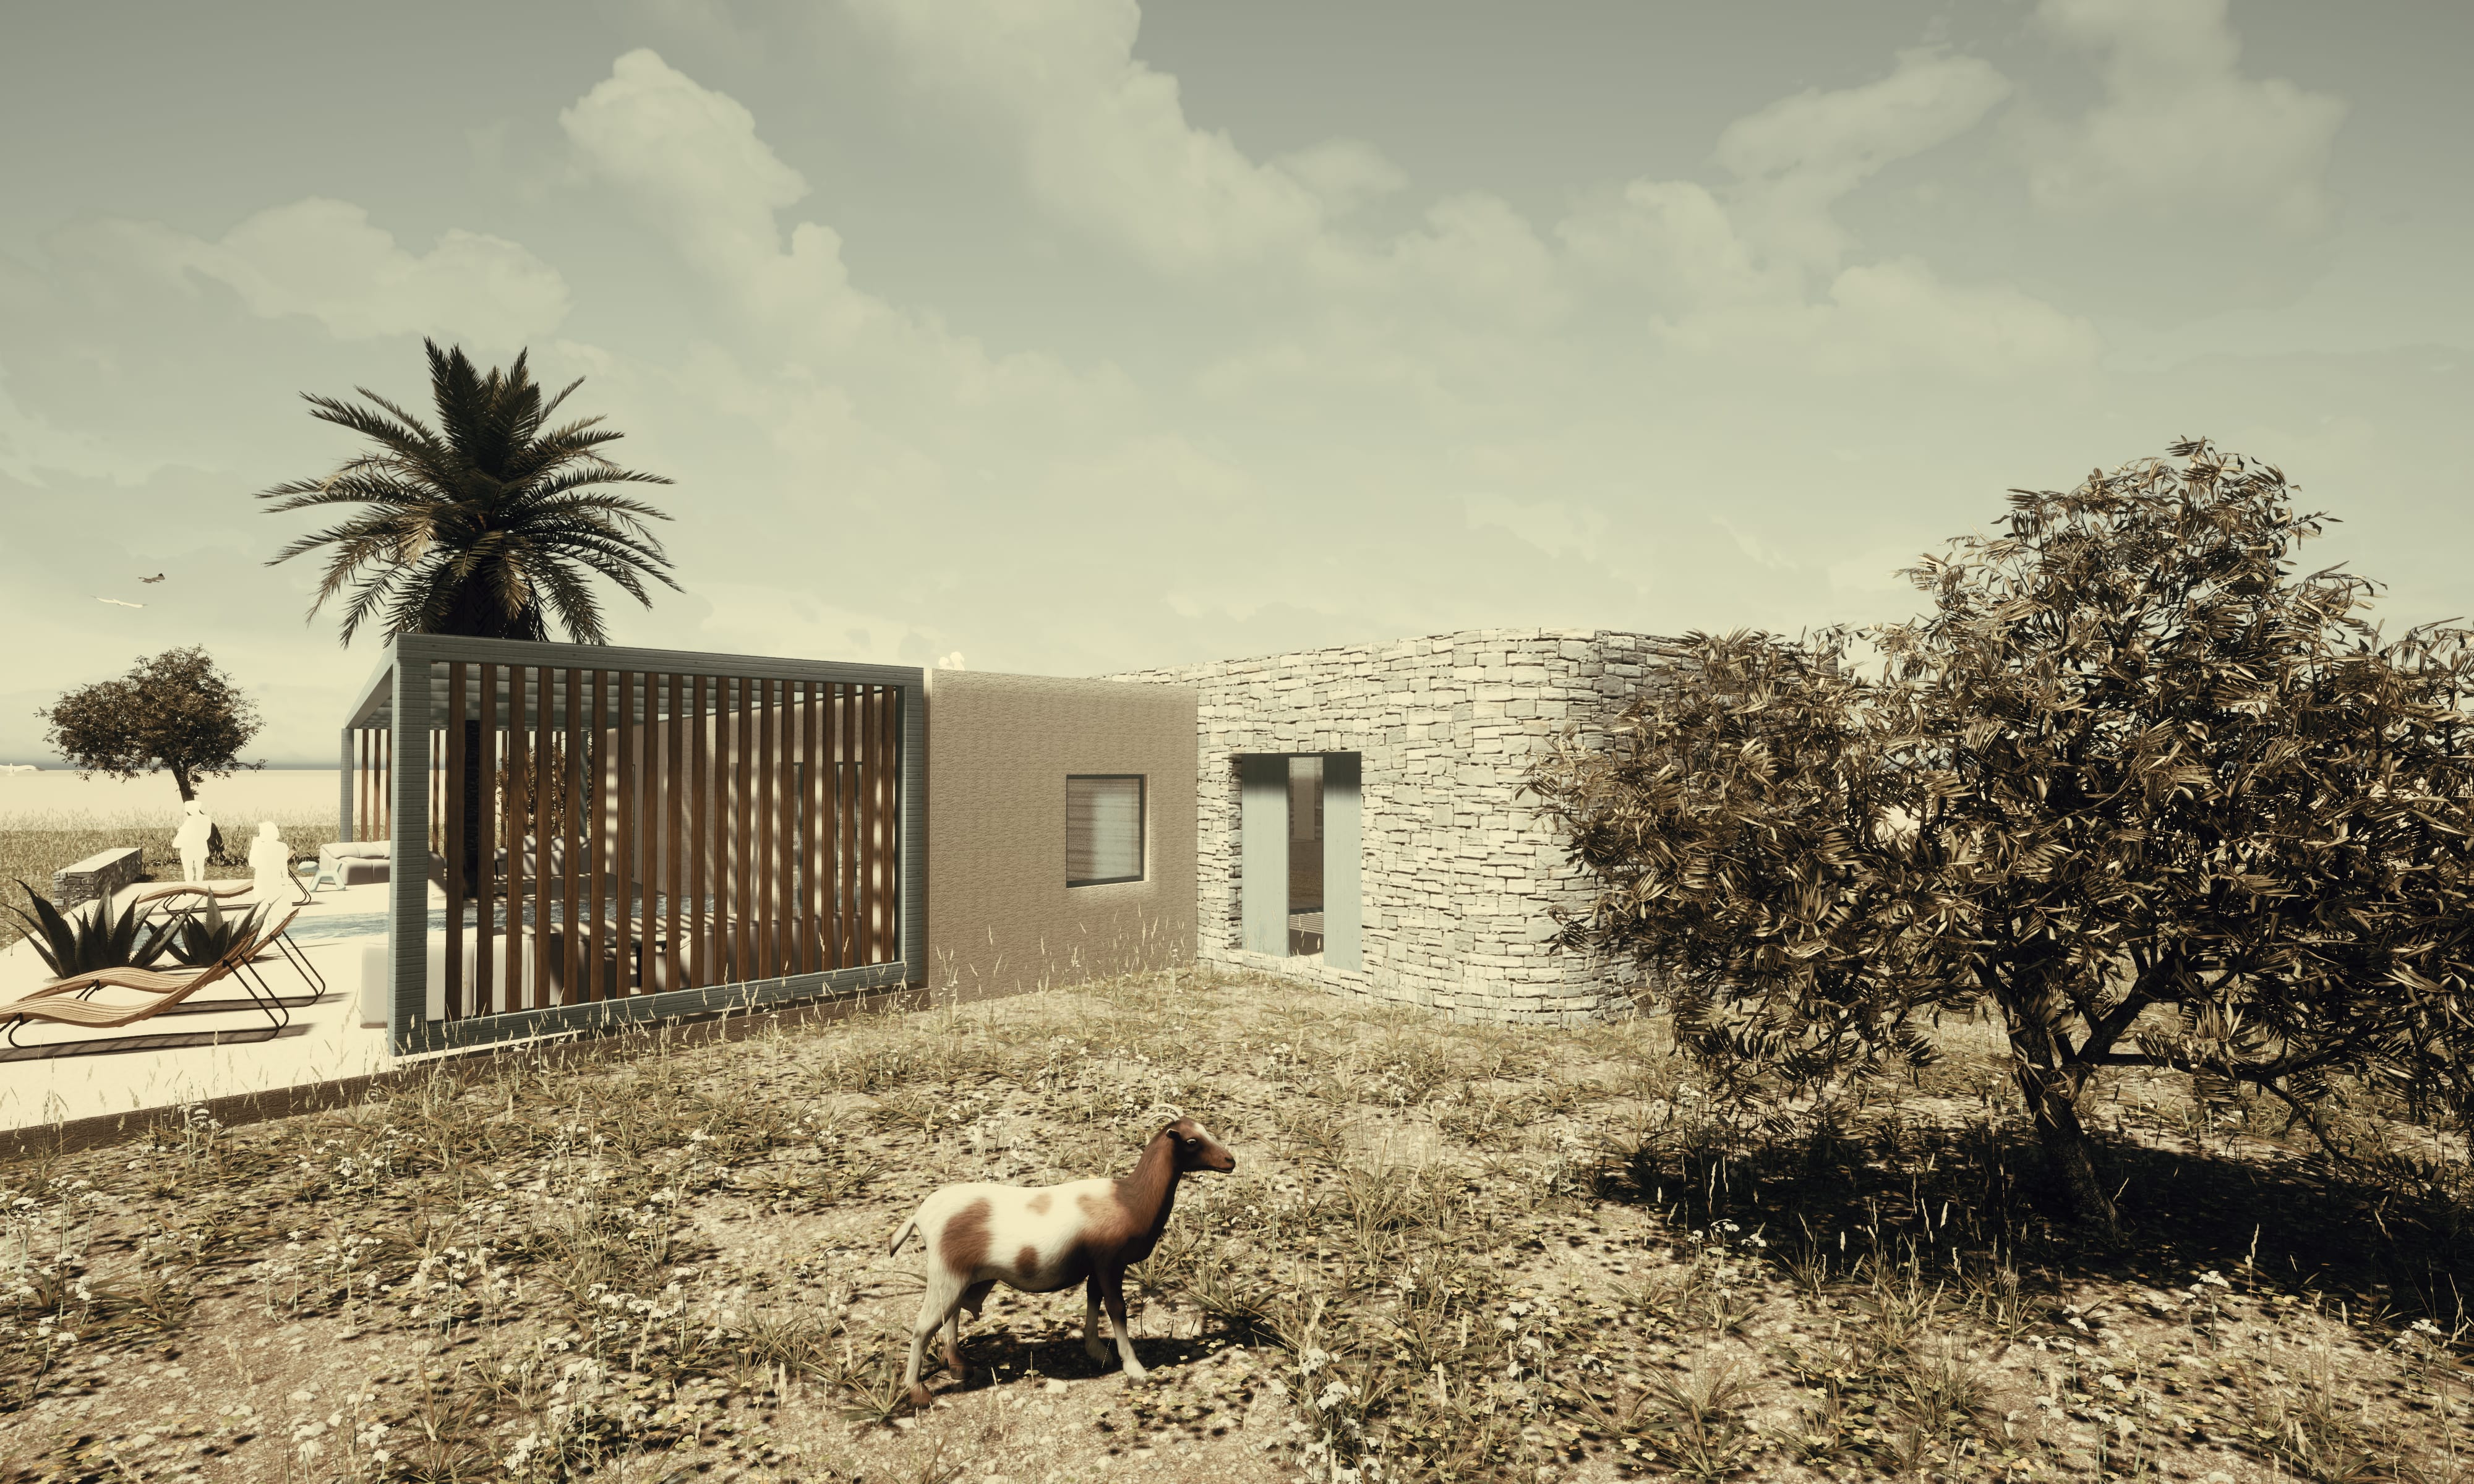 Evripiotis Architects--The Core House, Paros Island